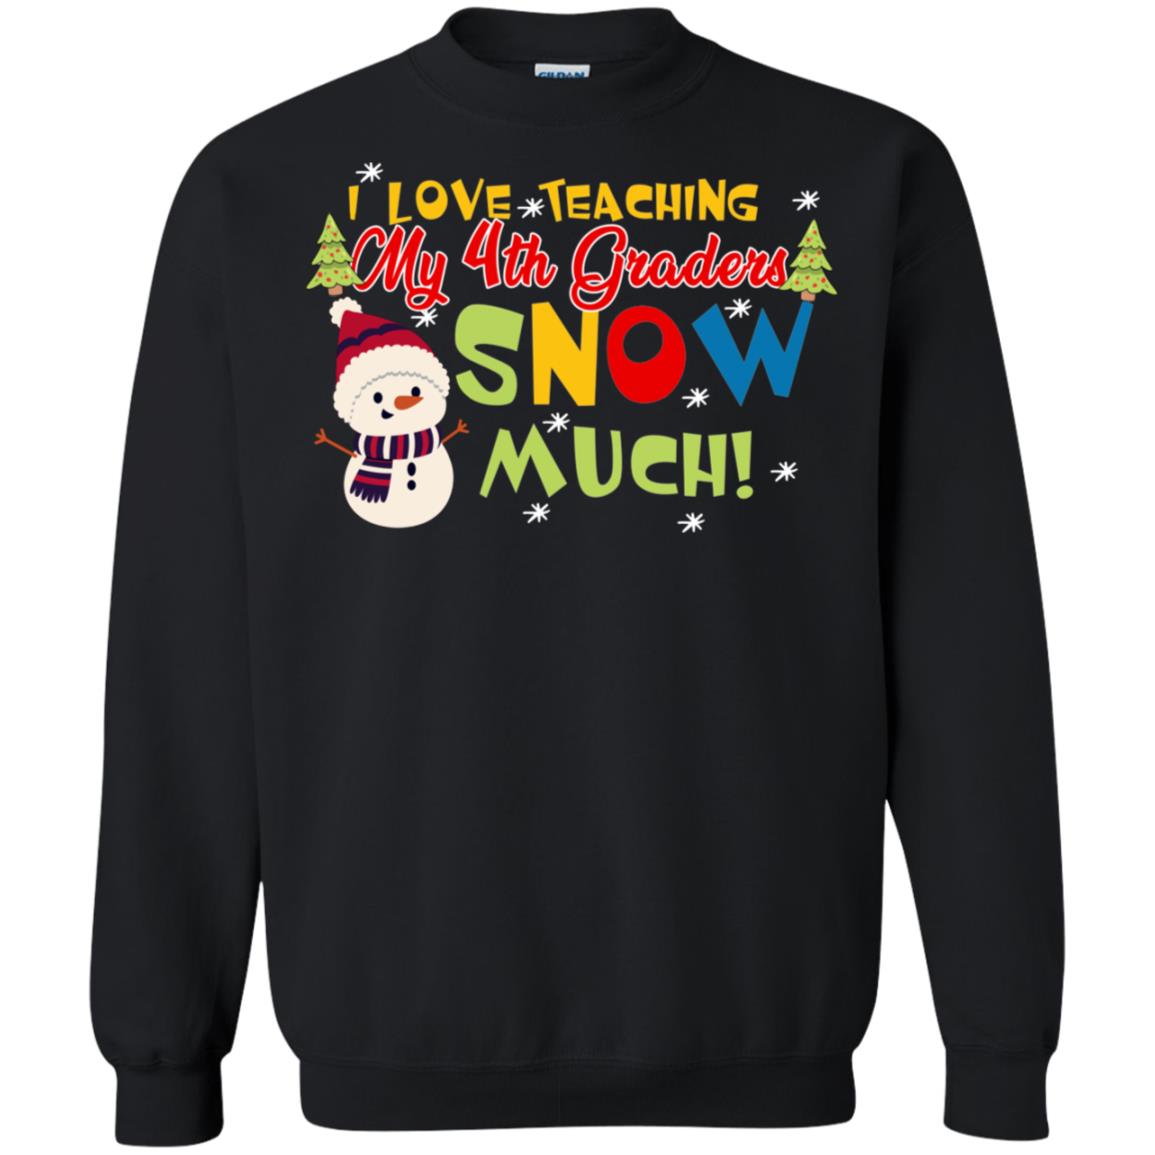 I Love Teaching My 4th Graders Snow Much X-mas Gift Shirt For TeachersG180 Gildan Crewneck Pullover Sweatshirt 8 oz.